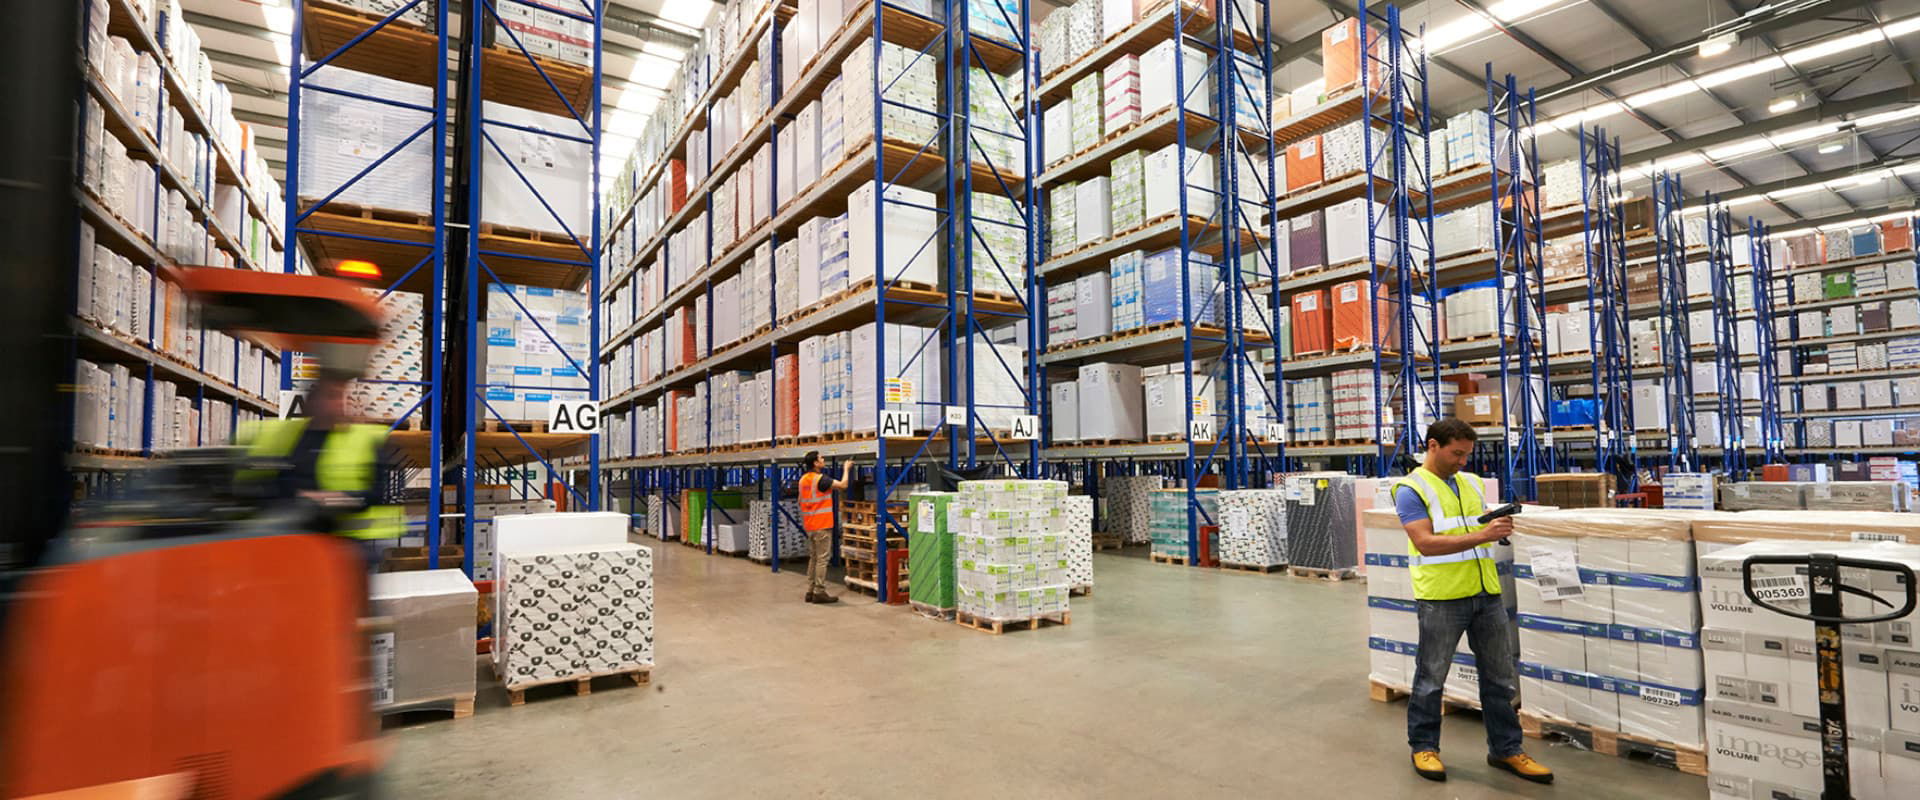 Warehouse Management System Definition